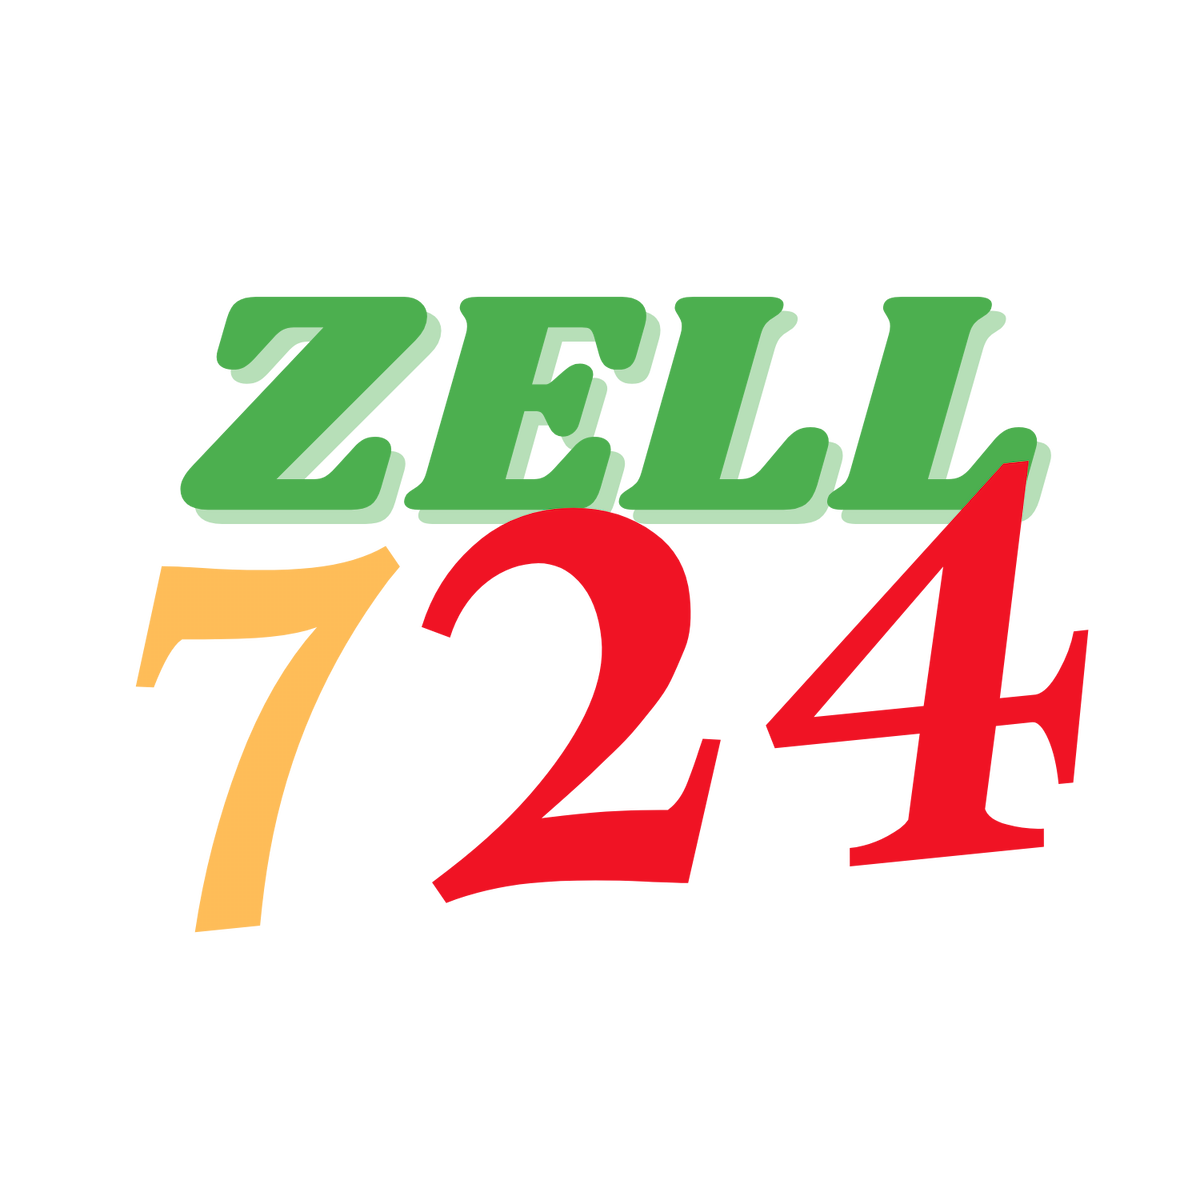 /assets/images/logos/Zell724_logo.png